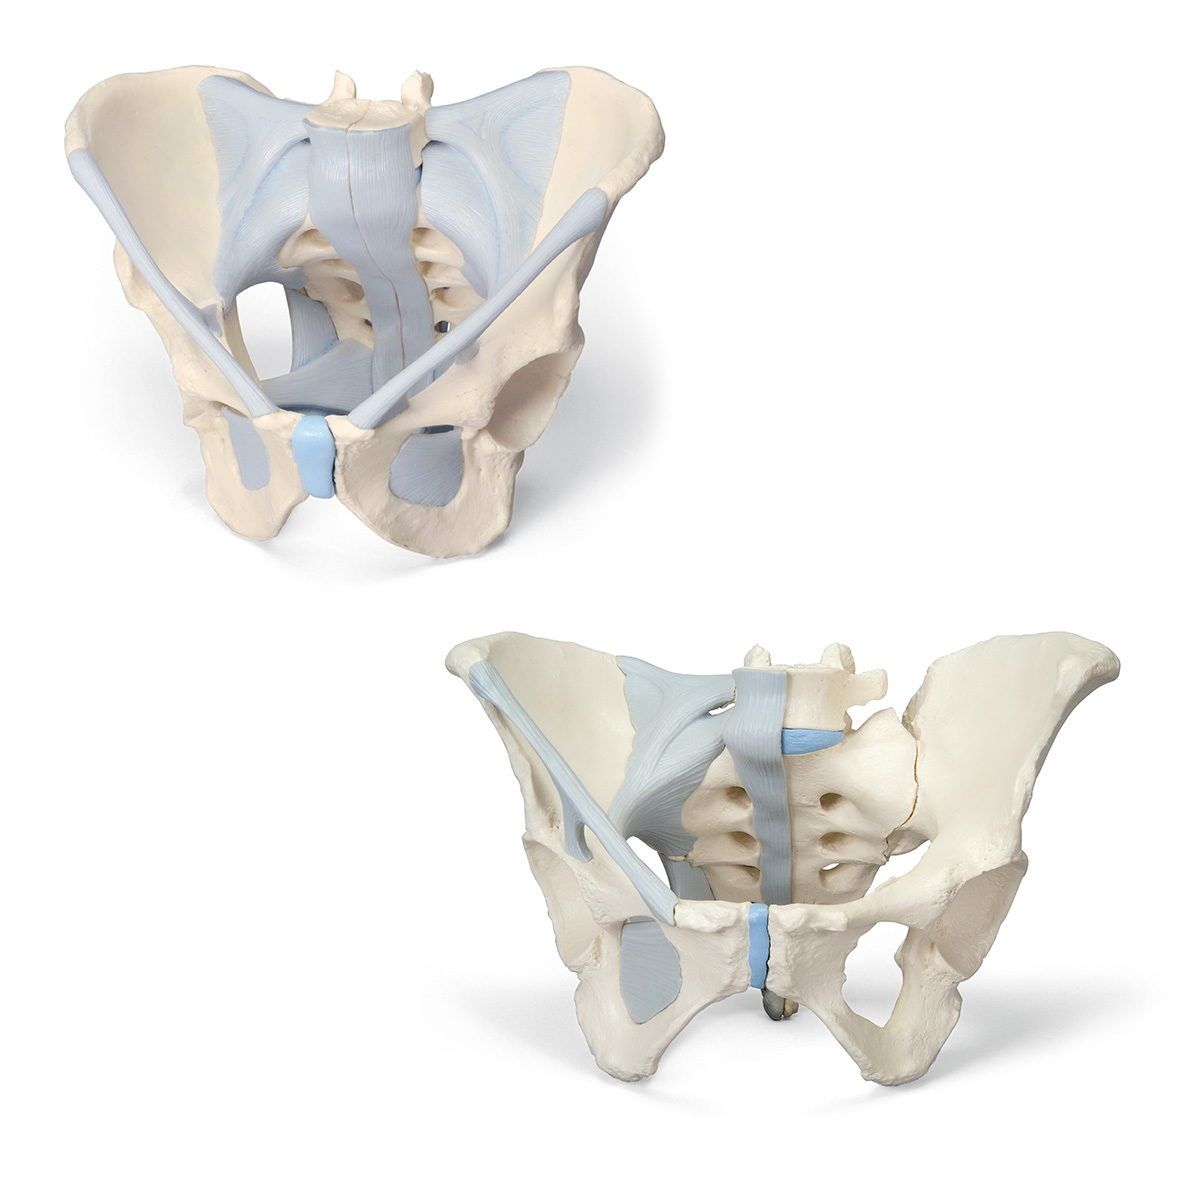 Anatomy Set Male & Female Pelvic Skeleton with Ligaments - 8001094 -  3010313 - Anatomy Sets - 3B Scientific